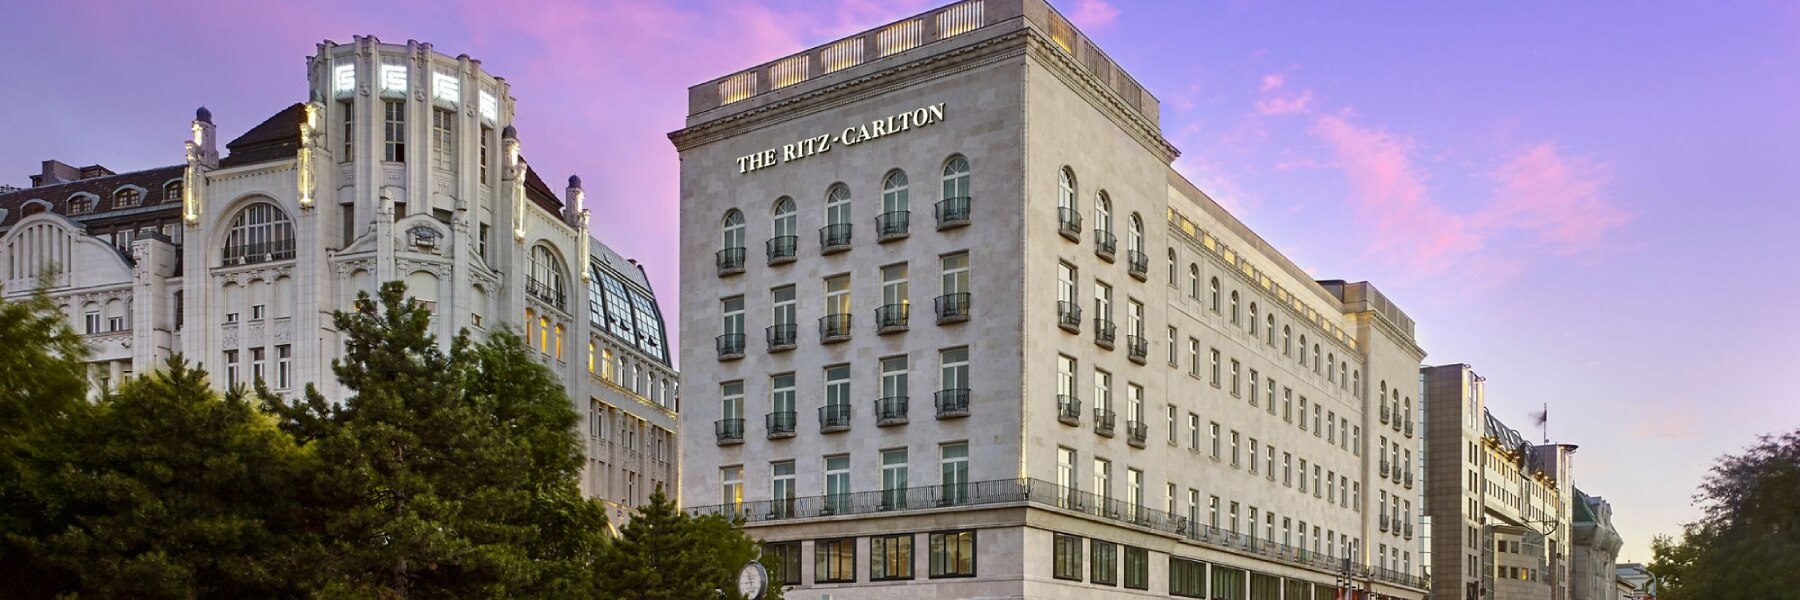 The Ritz-Carlton, Budapest